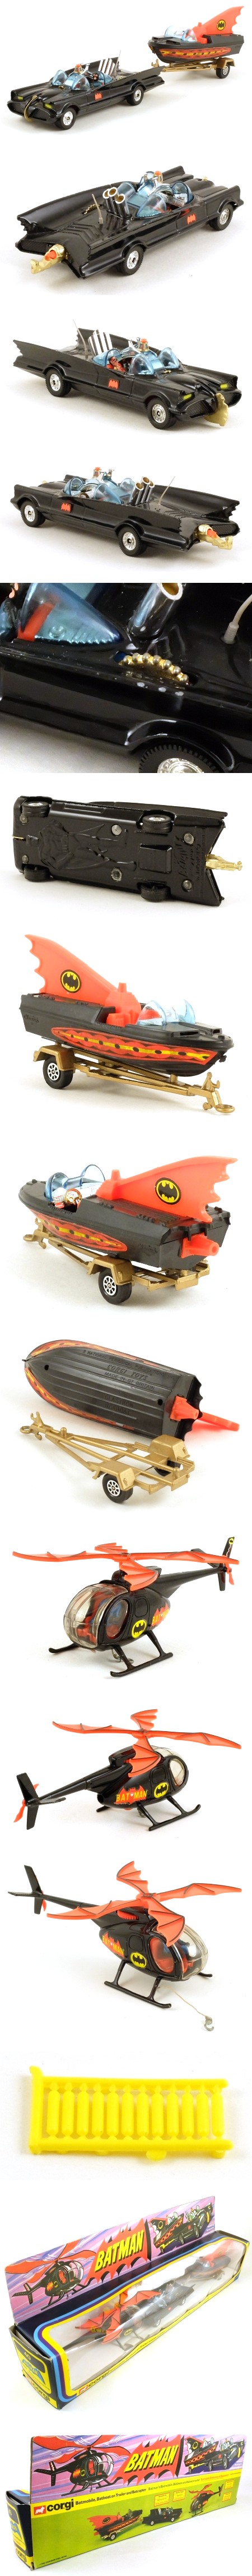 GS40 Batman Gift Set